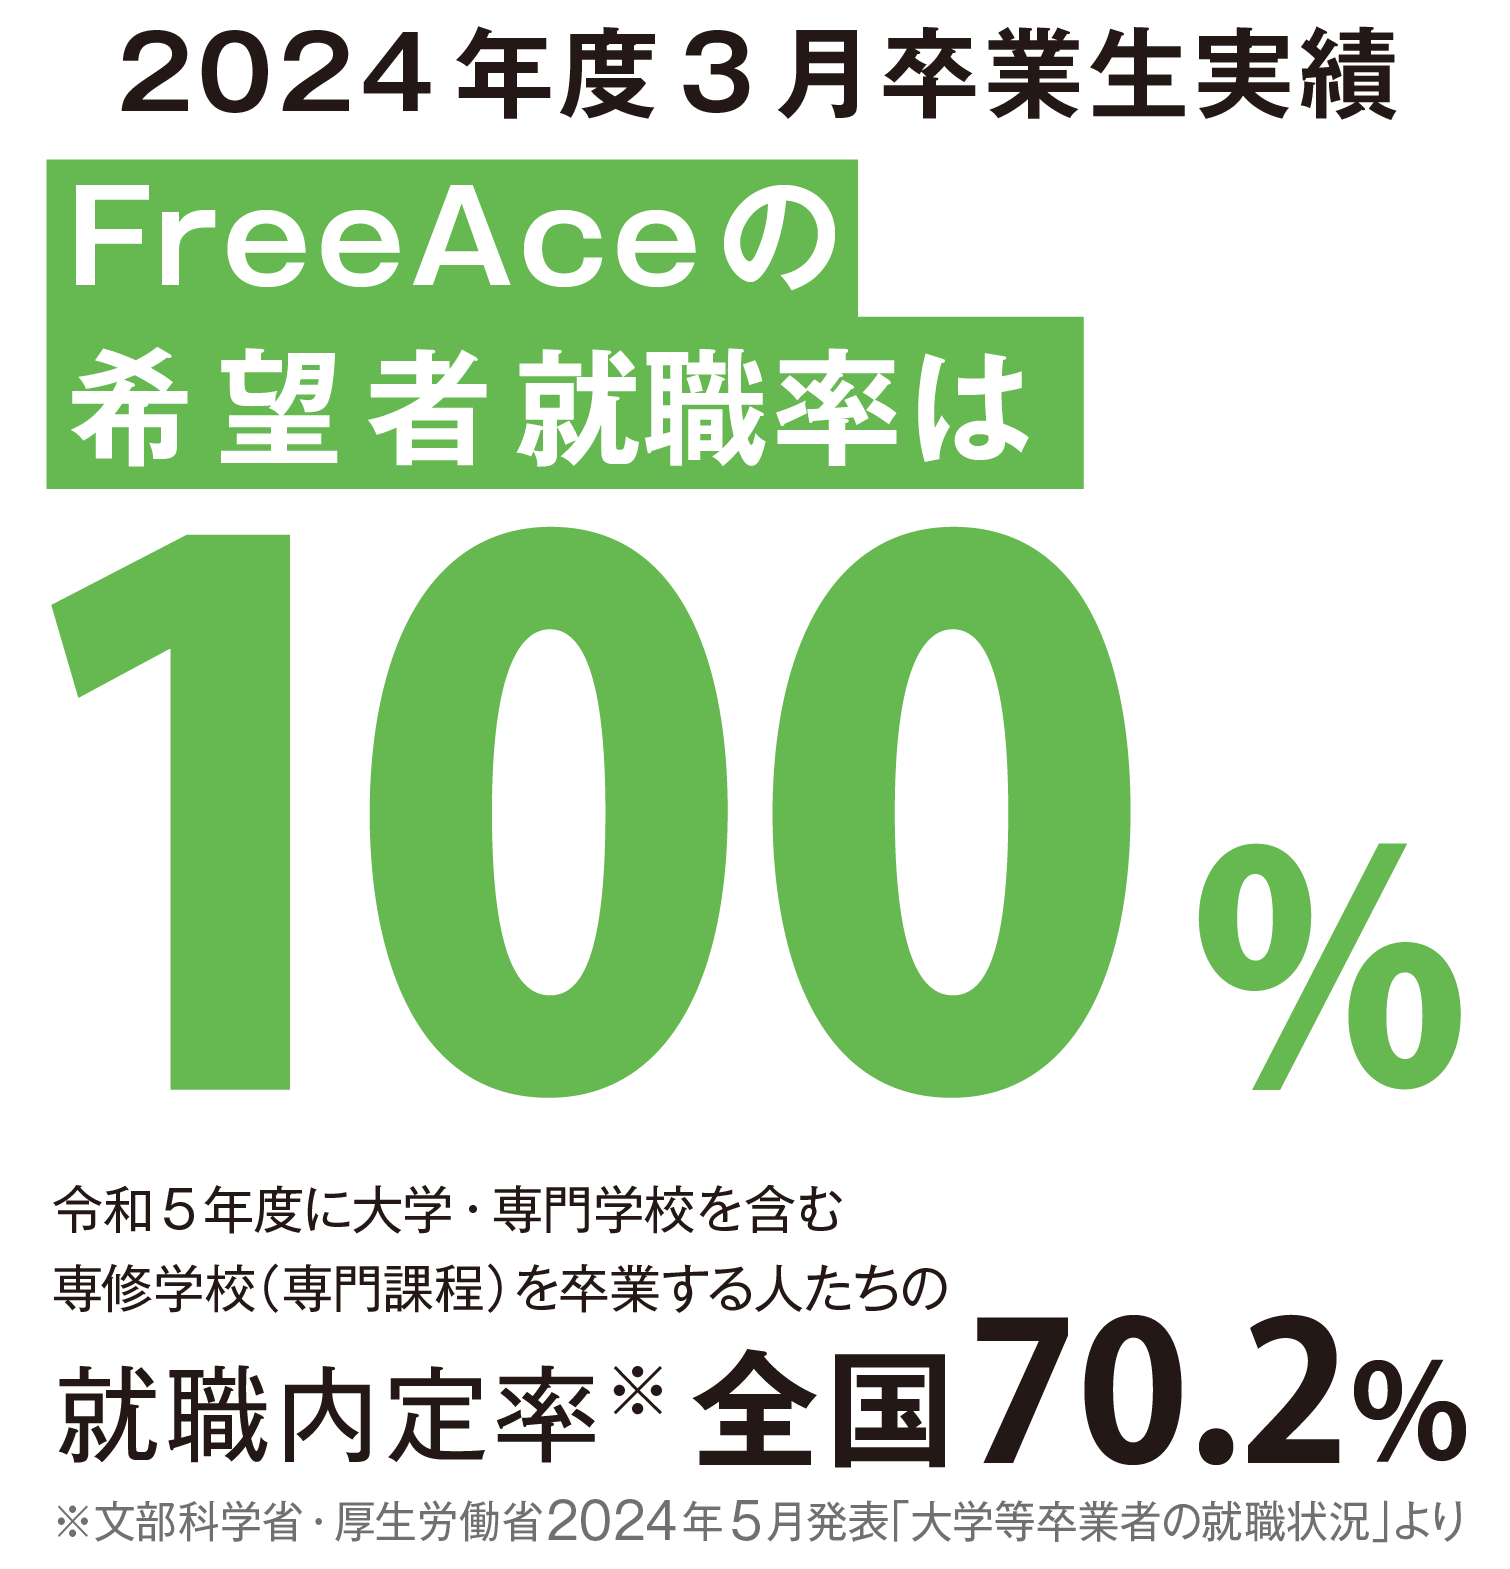 FreeAceの希望者就職率は100%